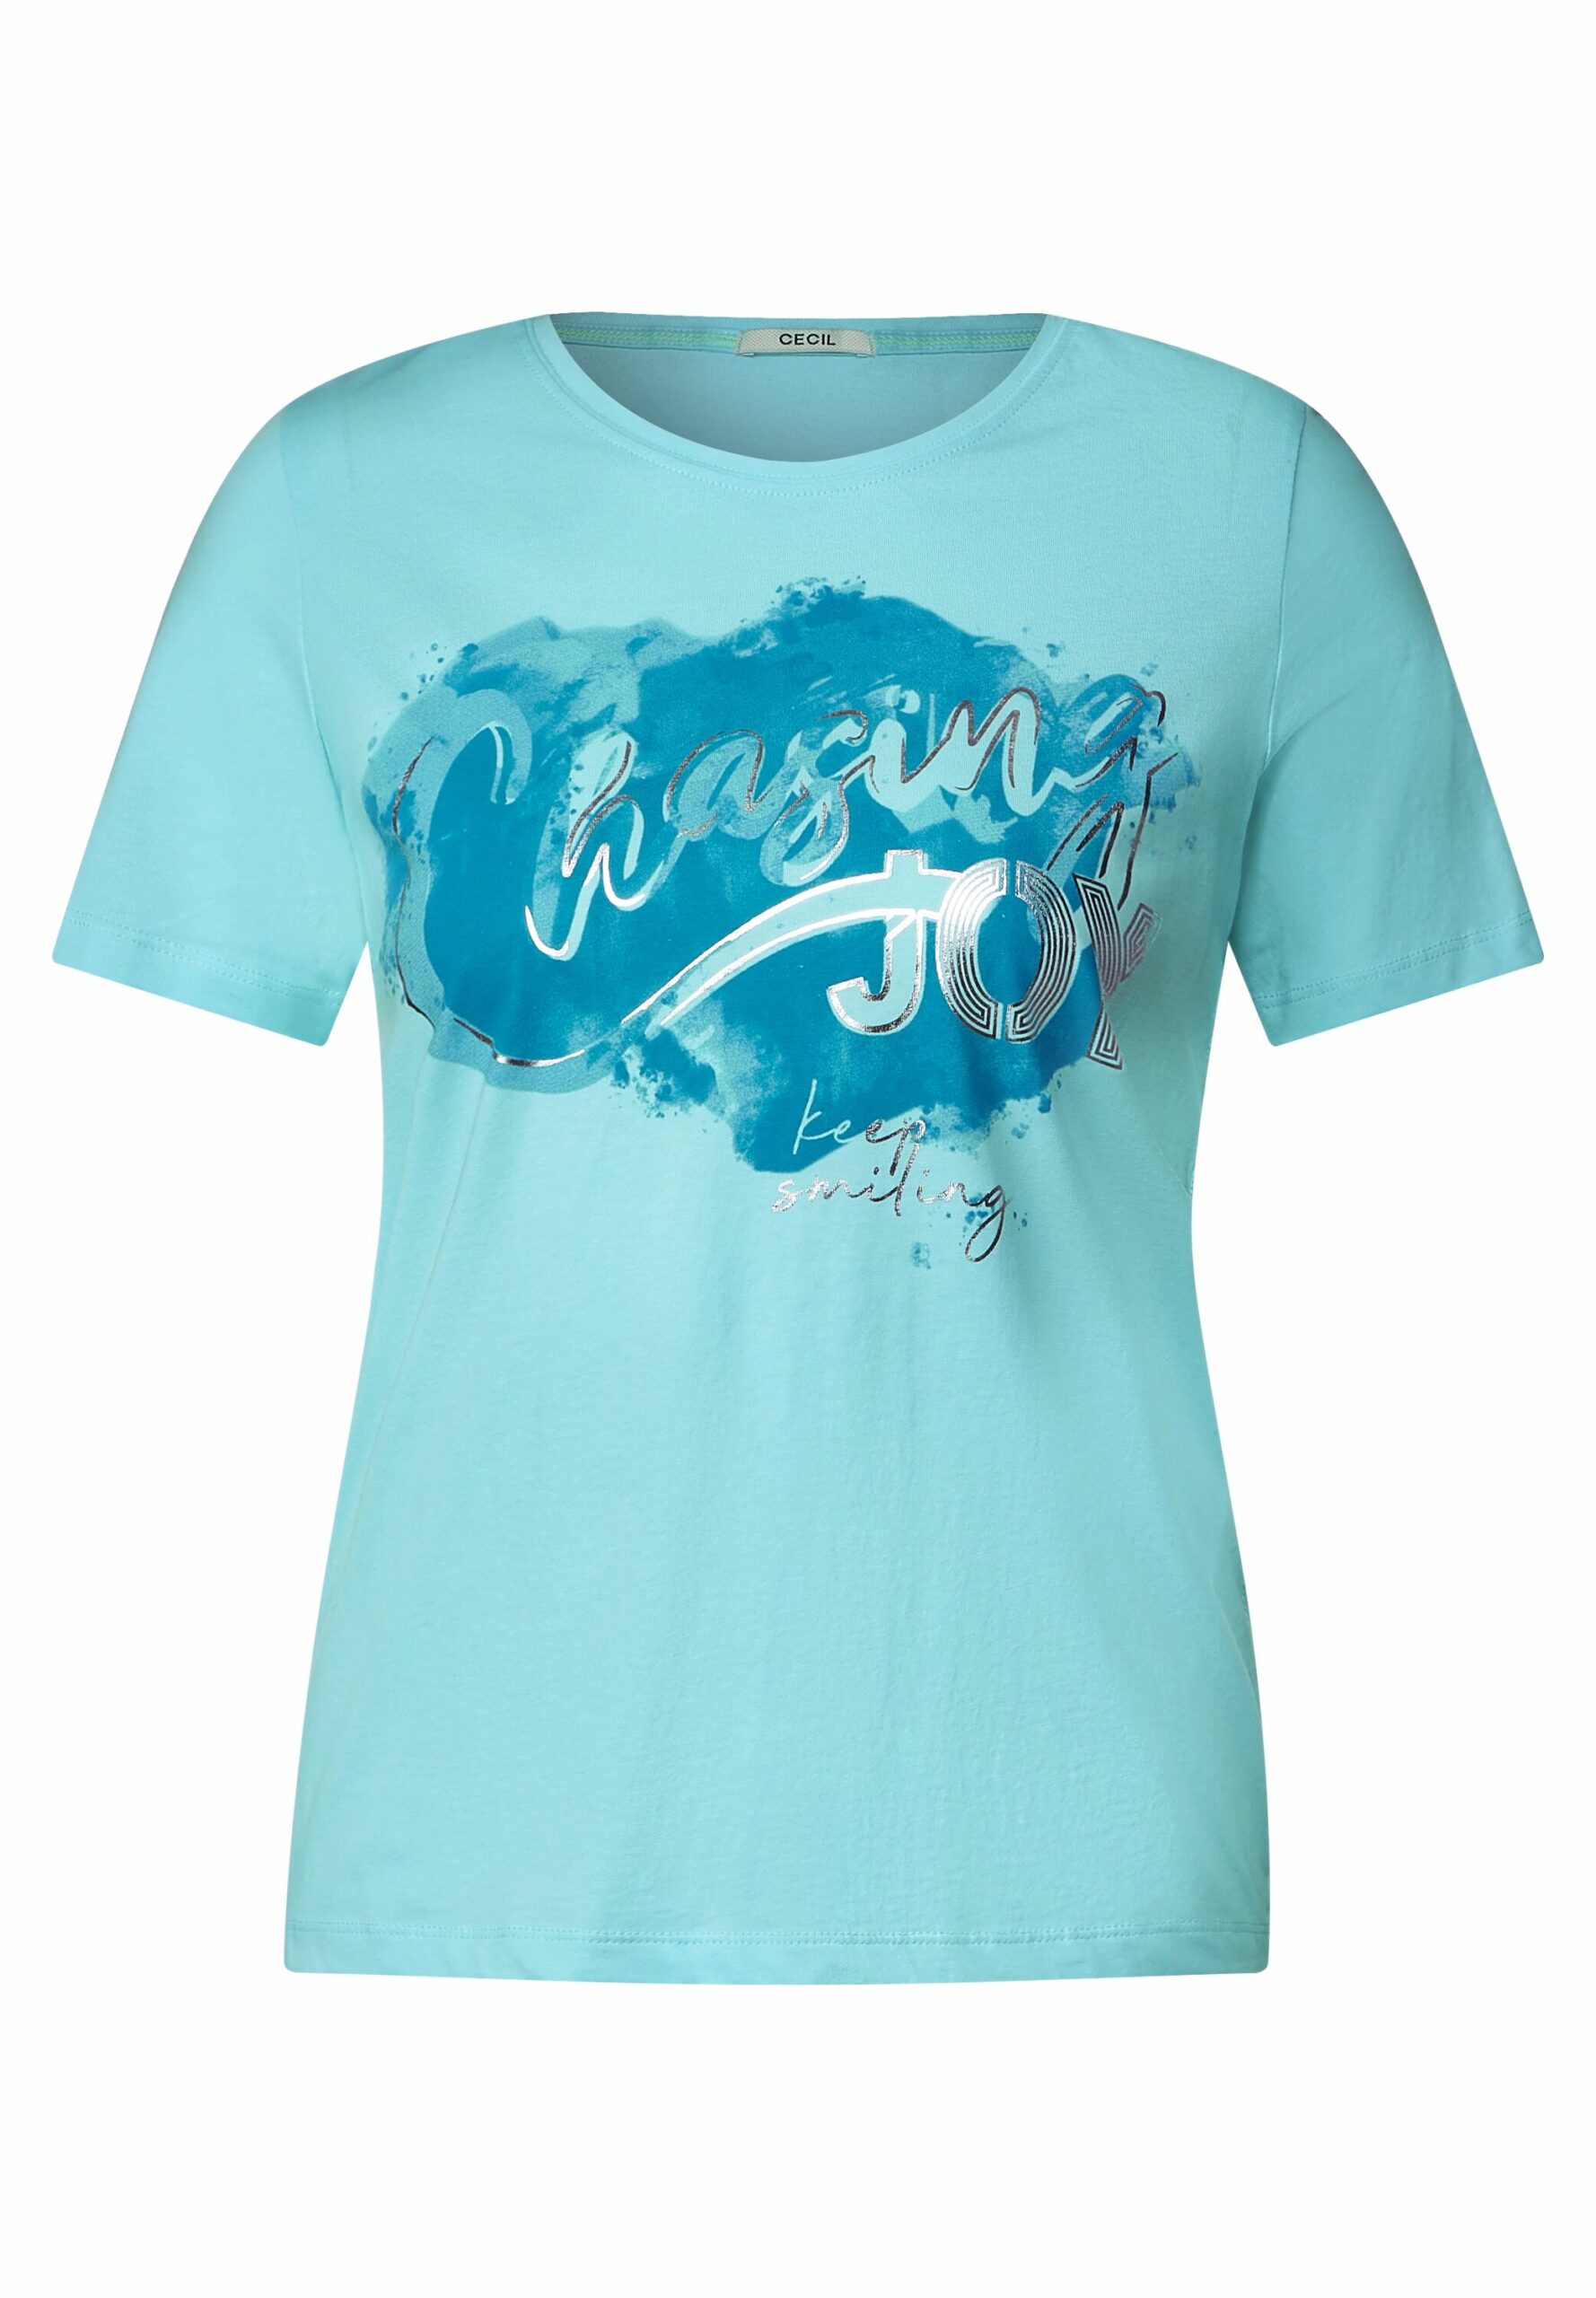 CECIL Damen T-Shirt Webshop - Kamlage Modehaus